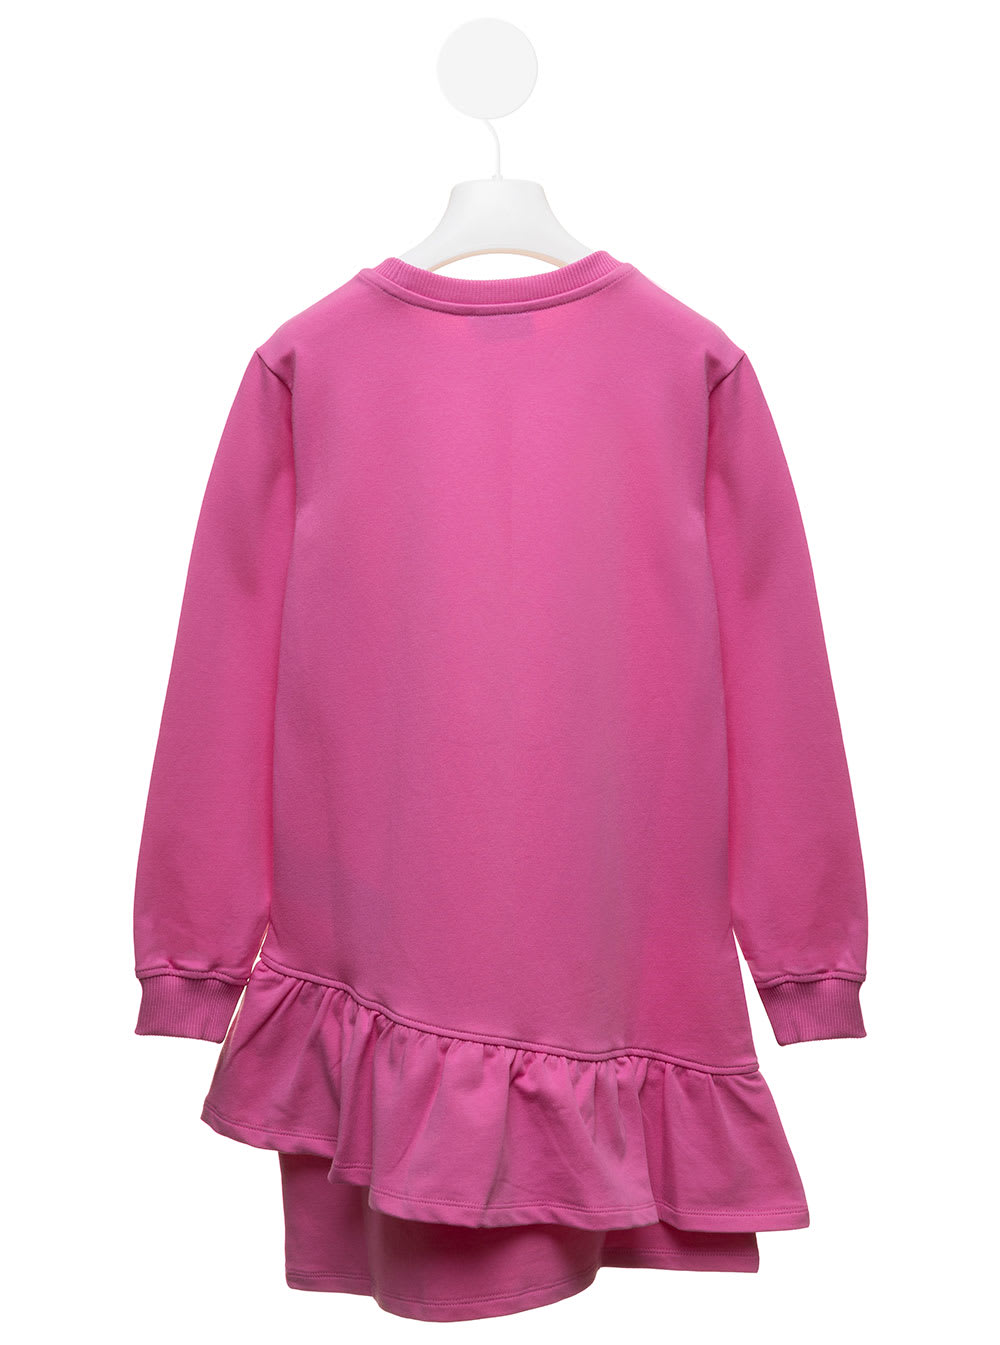 Asymmetrical Pink Cotton Dress With Teddy Bear Bag Print Moschino Kids Girl